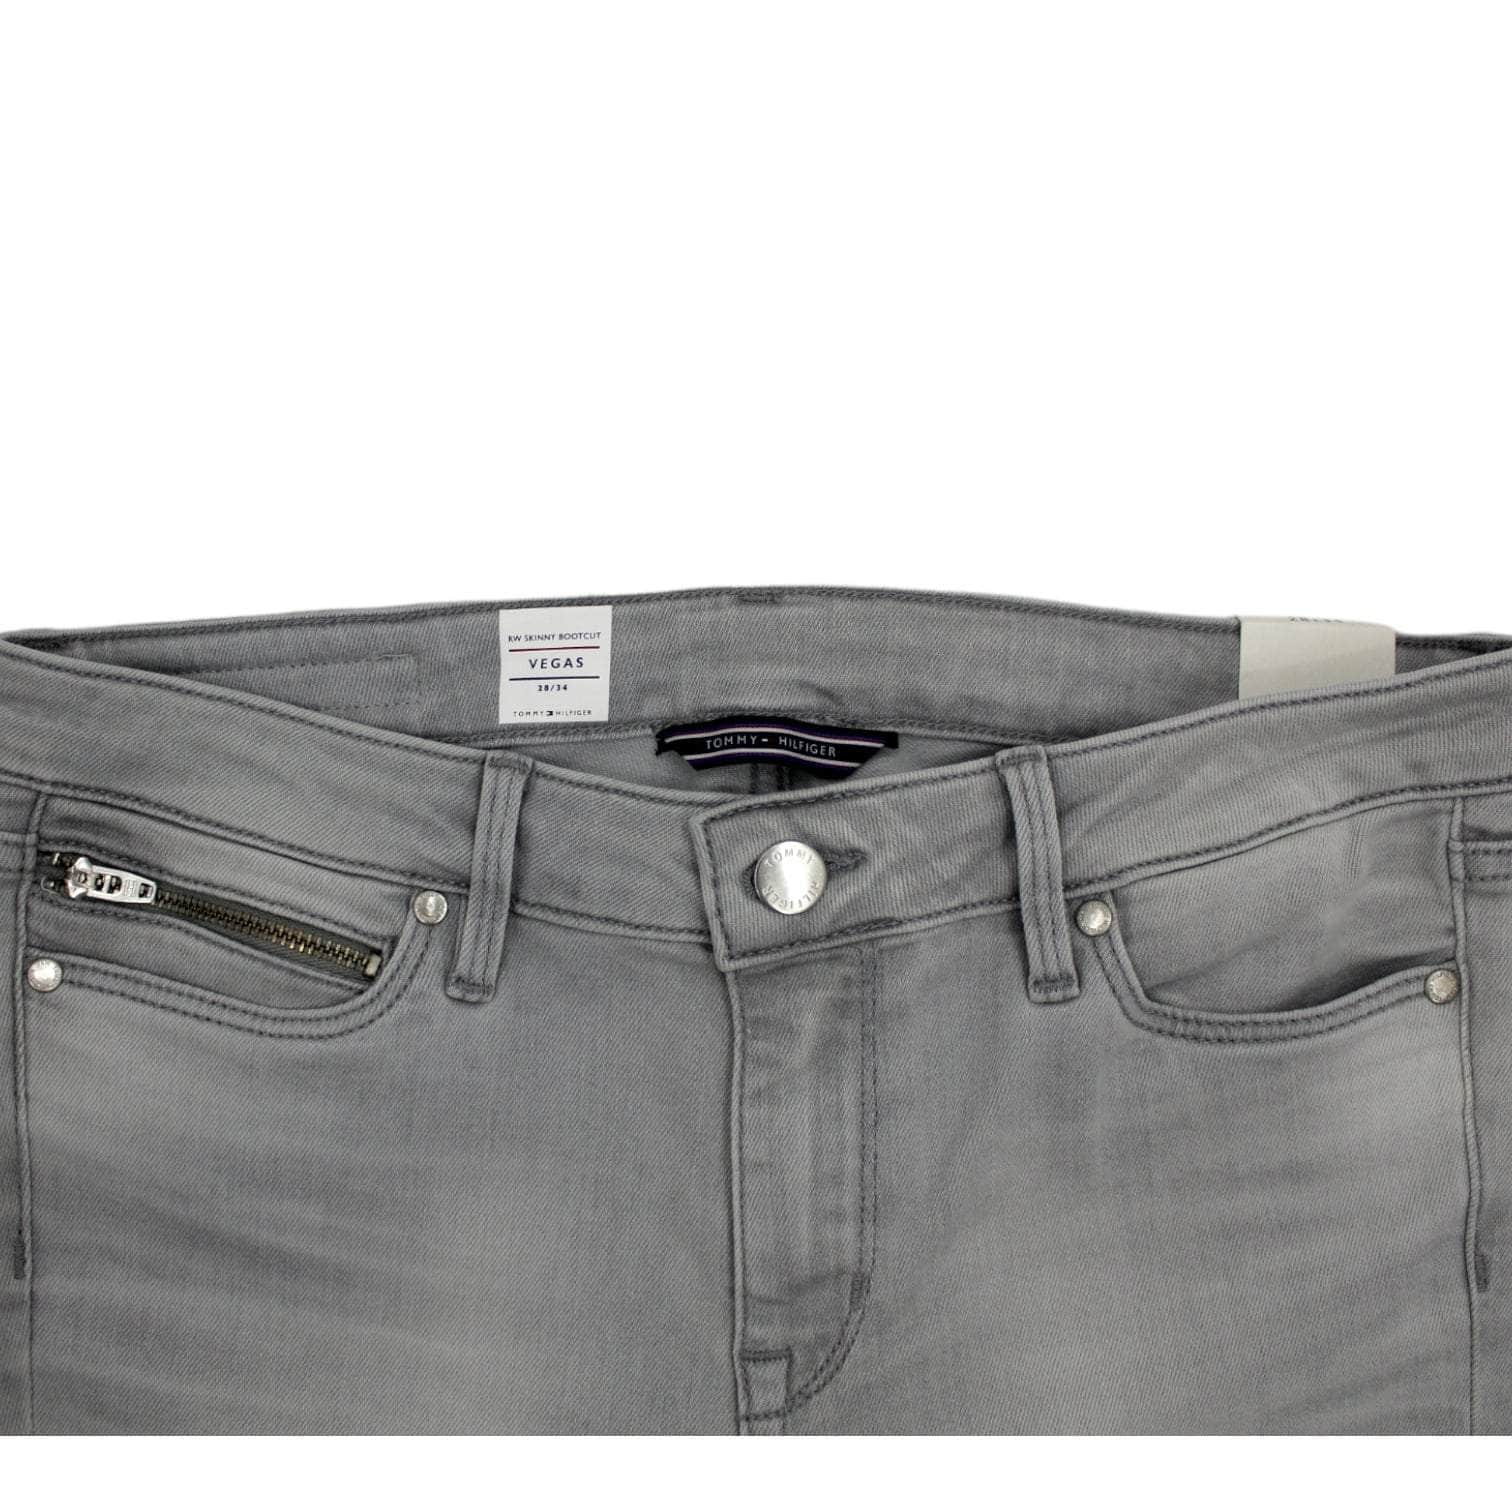 Tommy Hilfiger Grey Flared Skinny Jeans